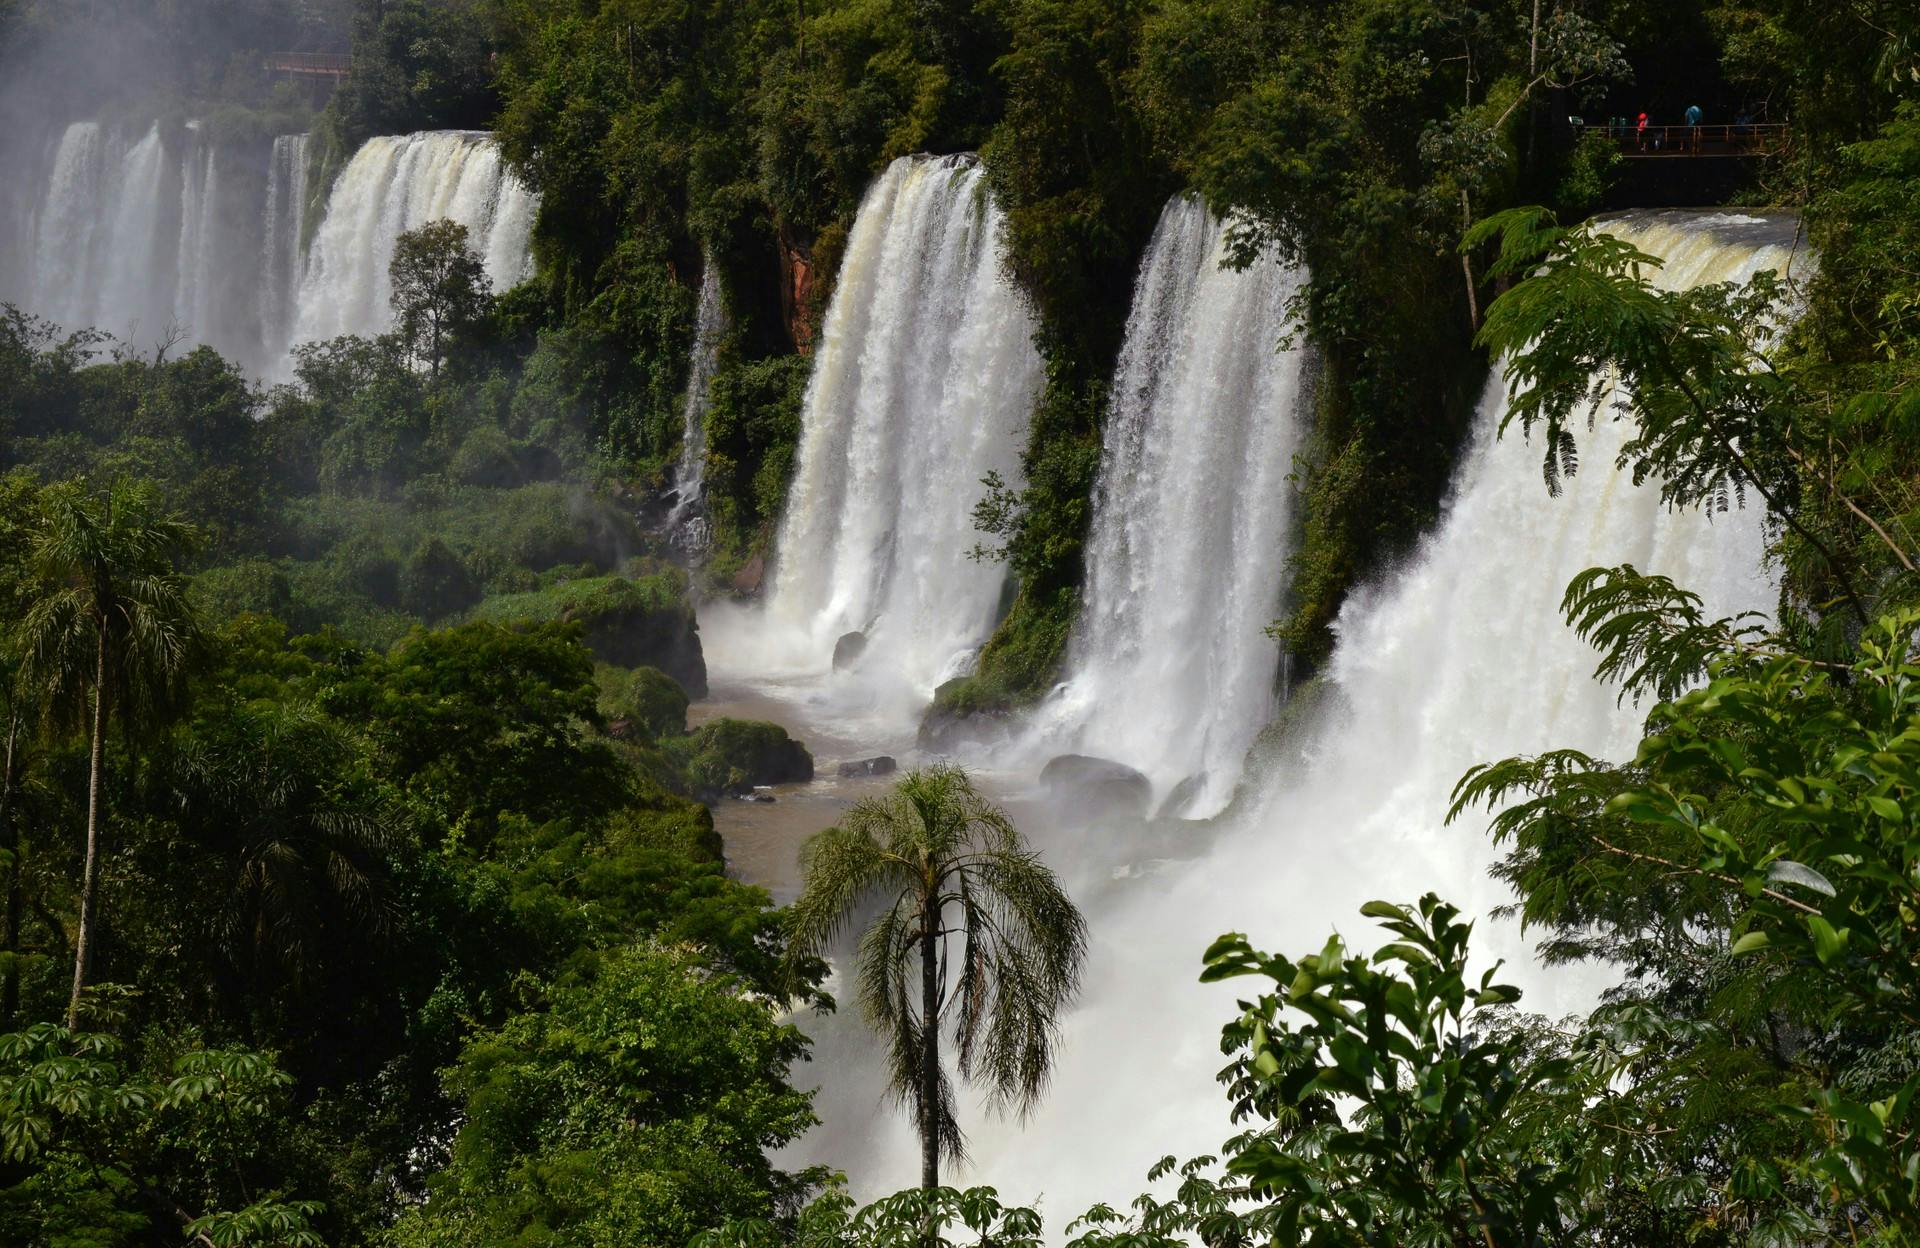 The spectacular Iguazu Falls